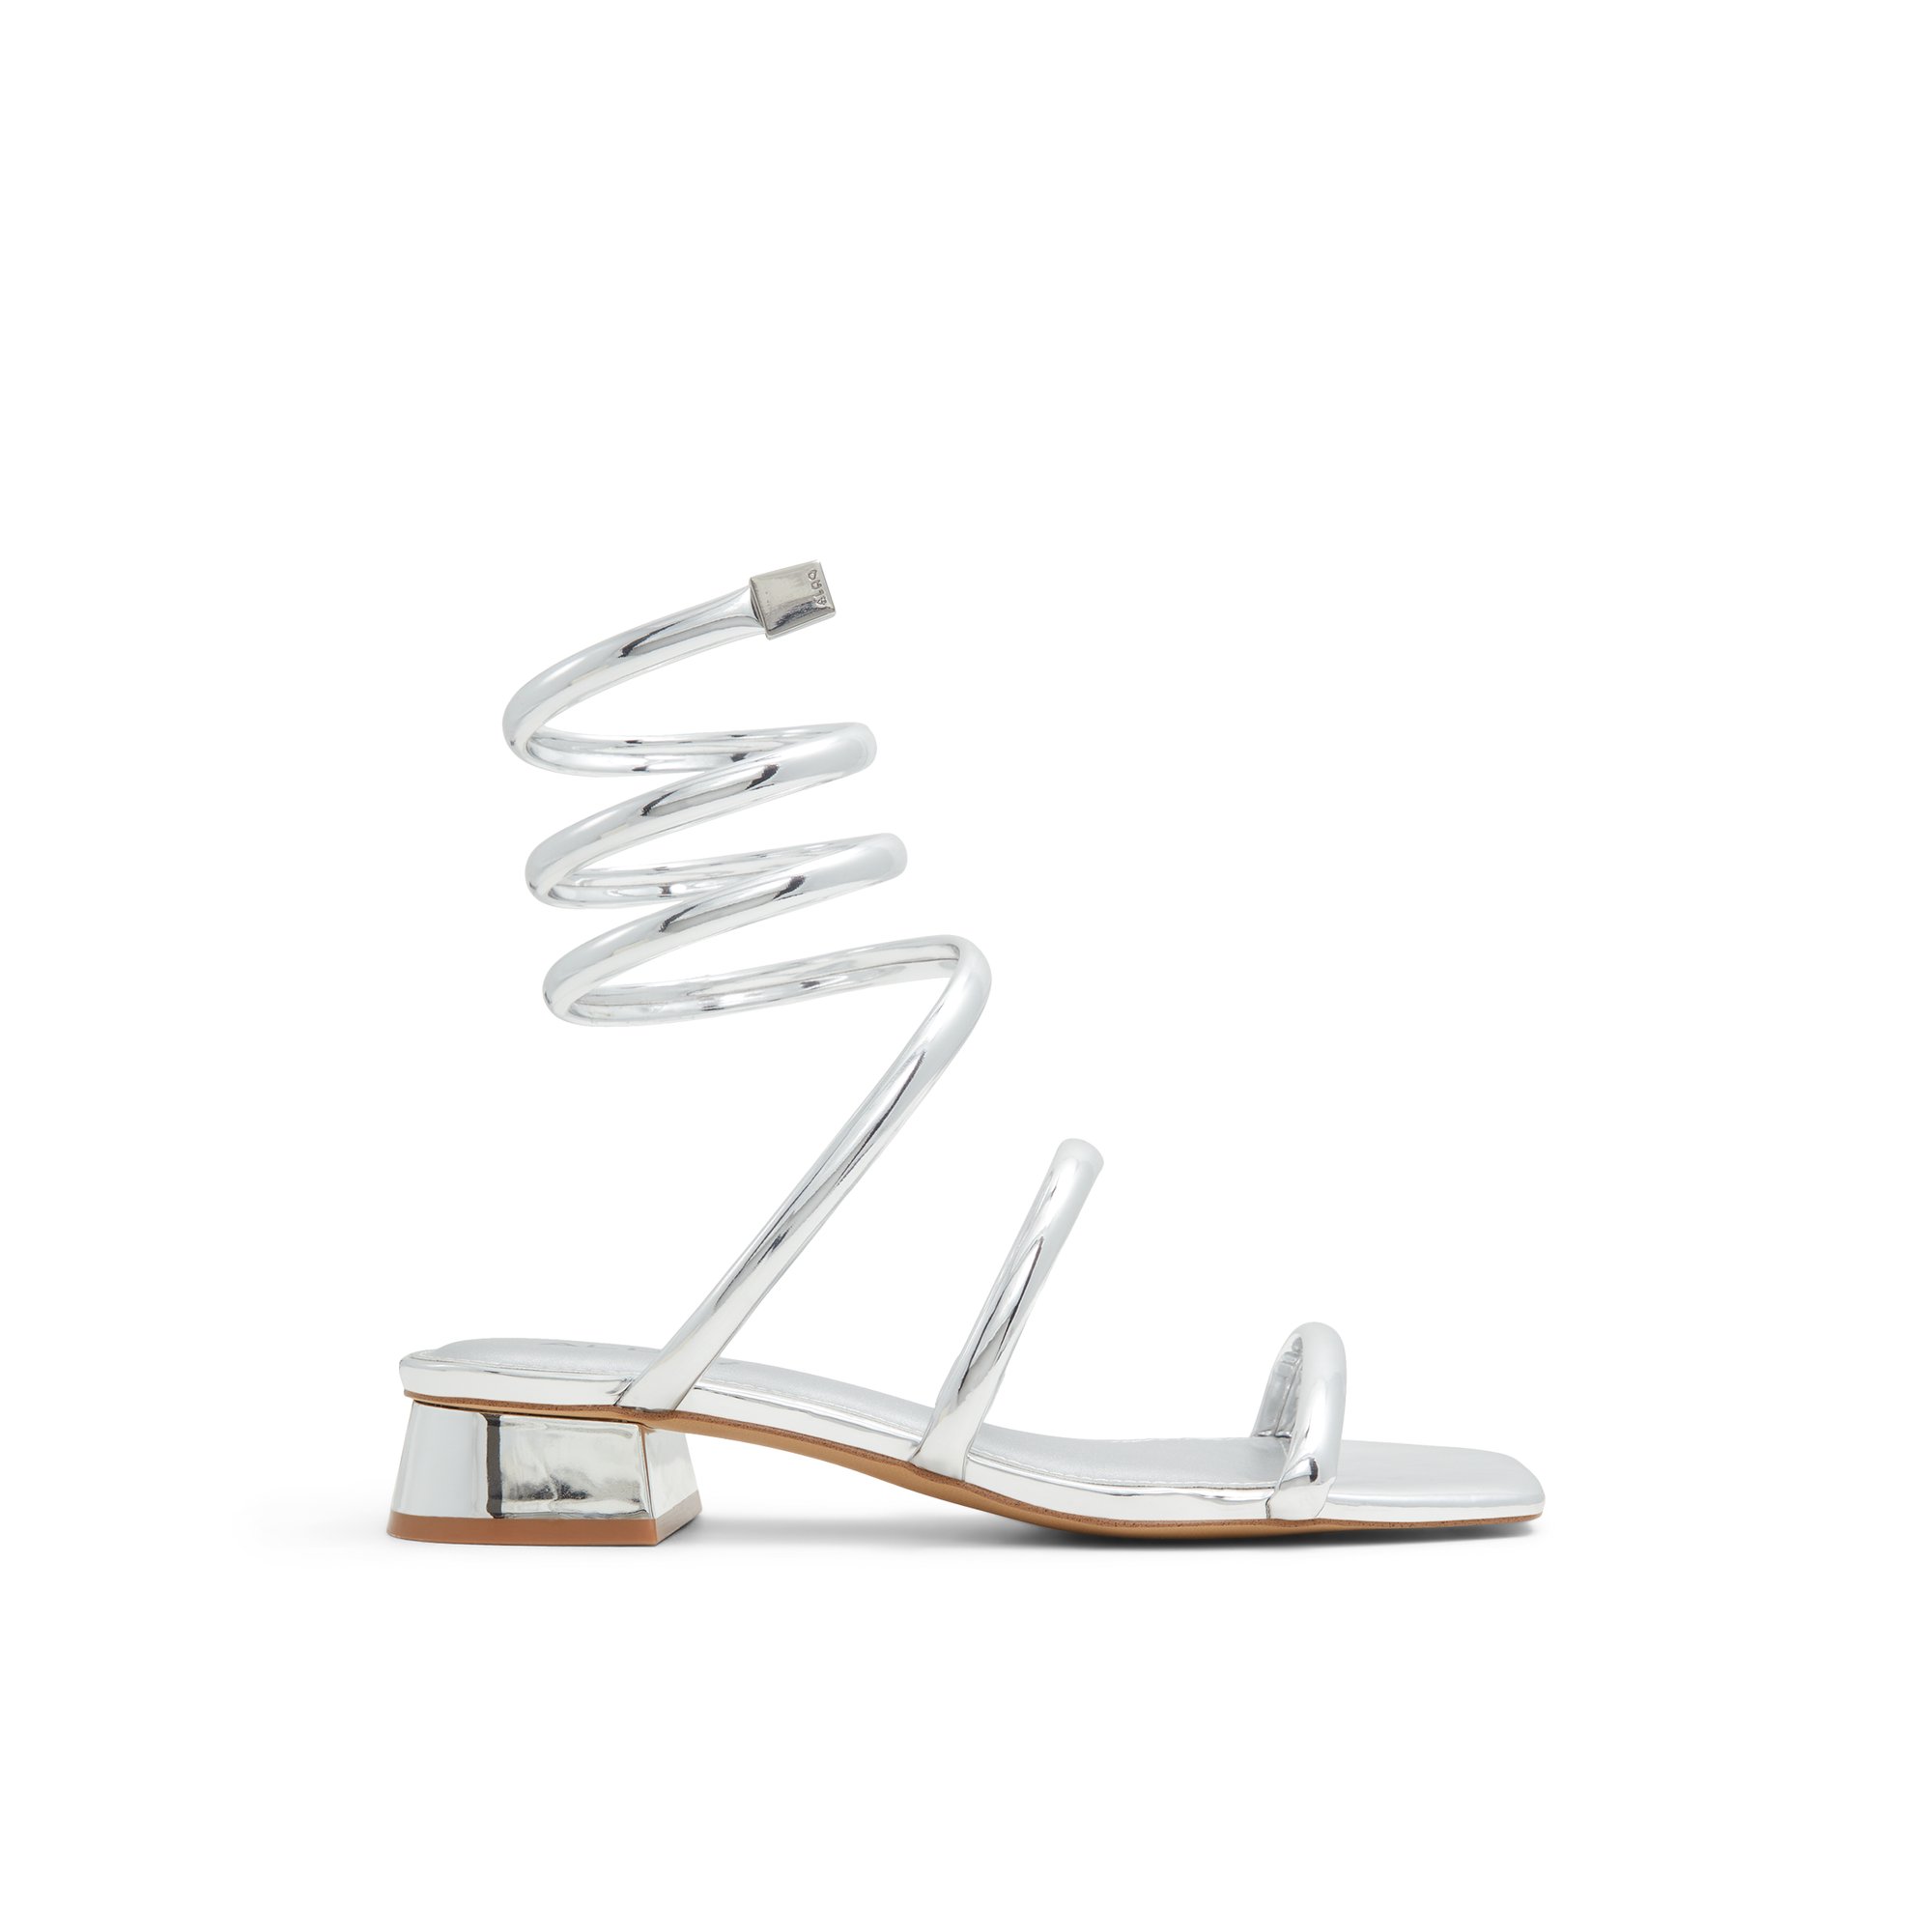 ALDO Spinna - Women's Strappy Sandal Sandals - Silver